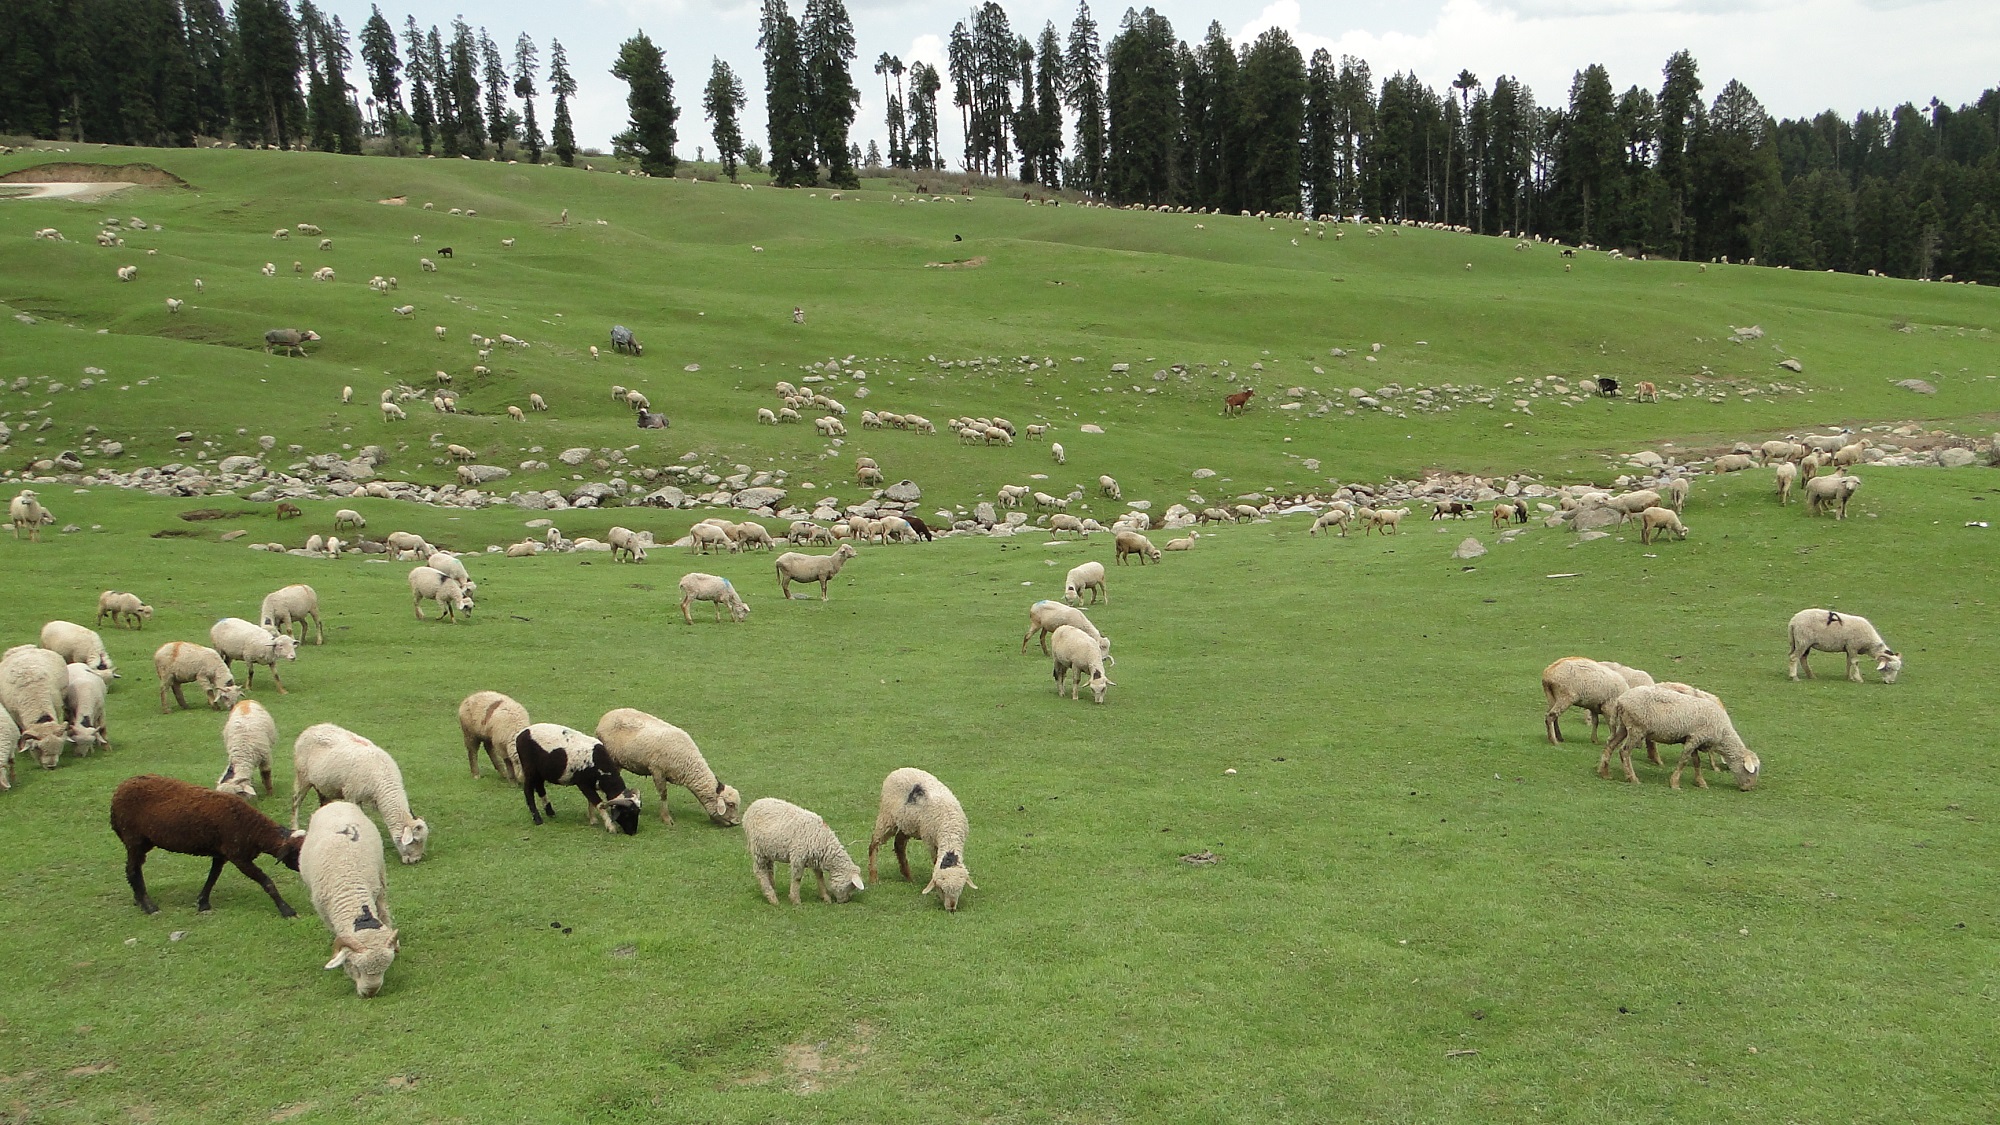 Sheep and horses graze in Doodhpathri (Kashmir, India). Photo: Ankur P (https://www.flickr.com/photos/ankurp/14234174051/)